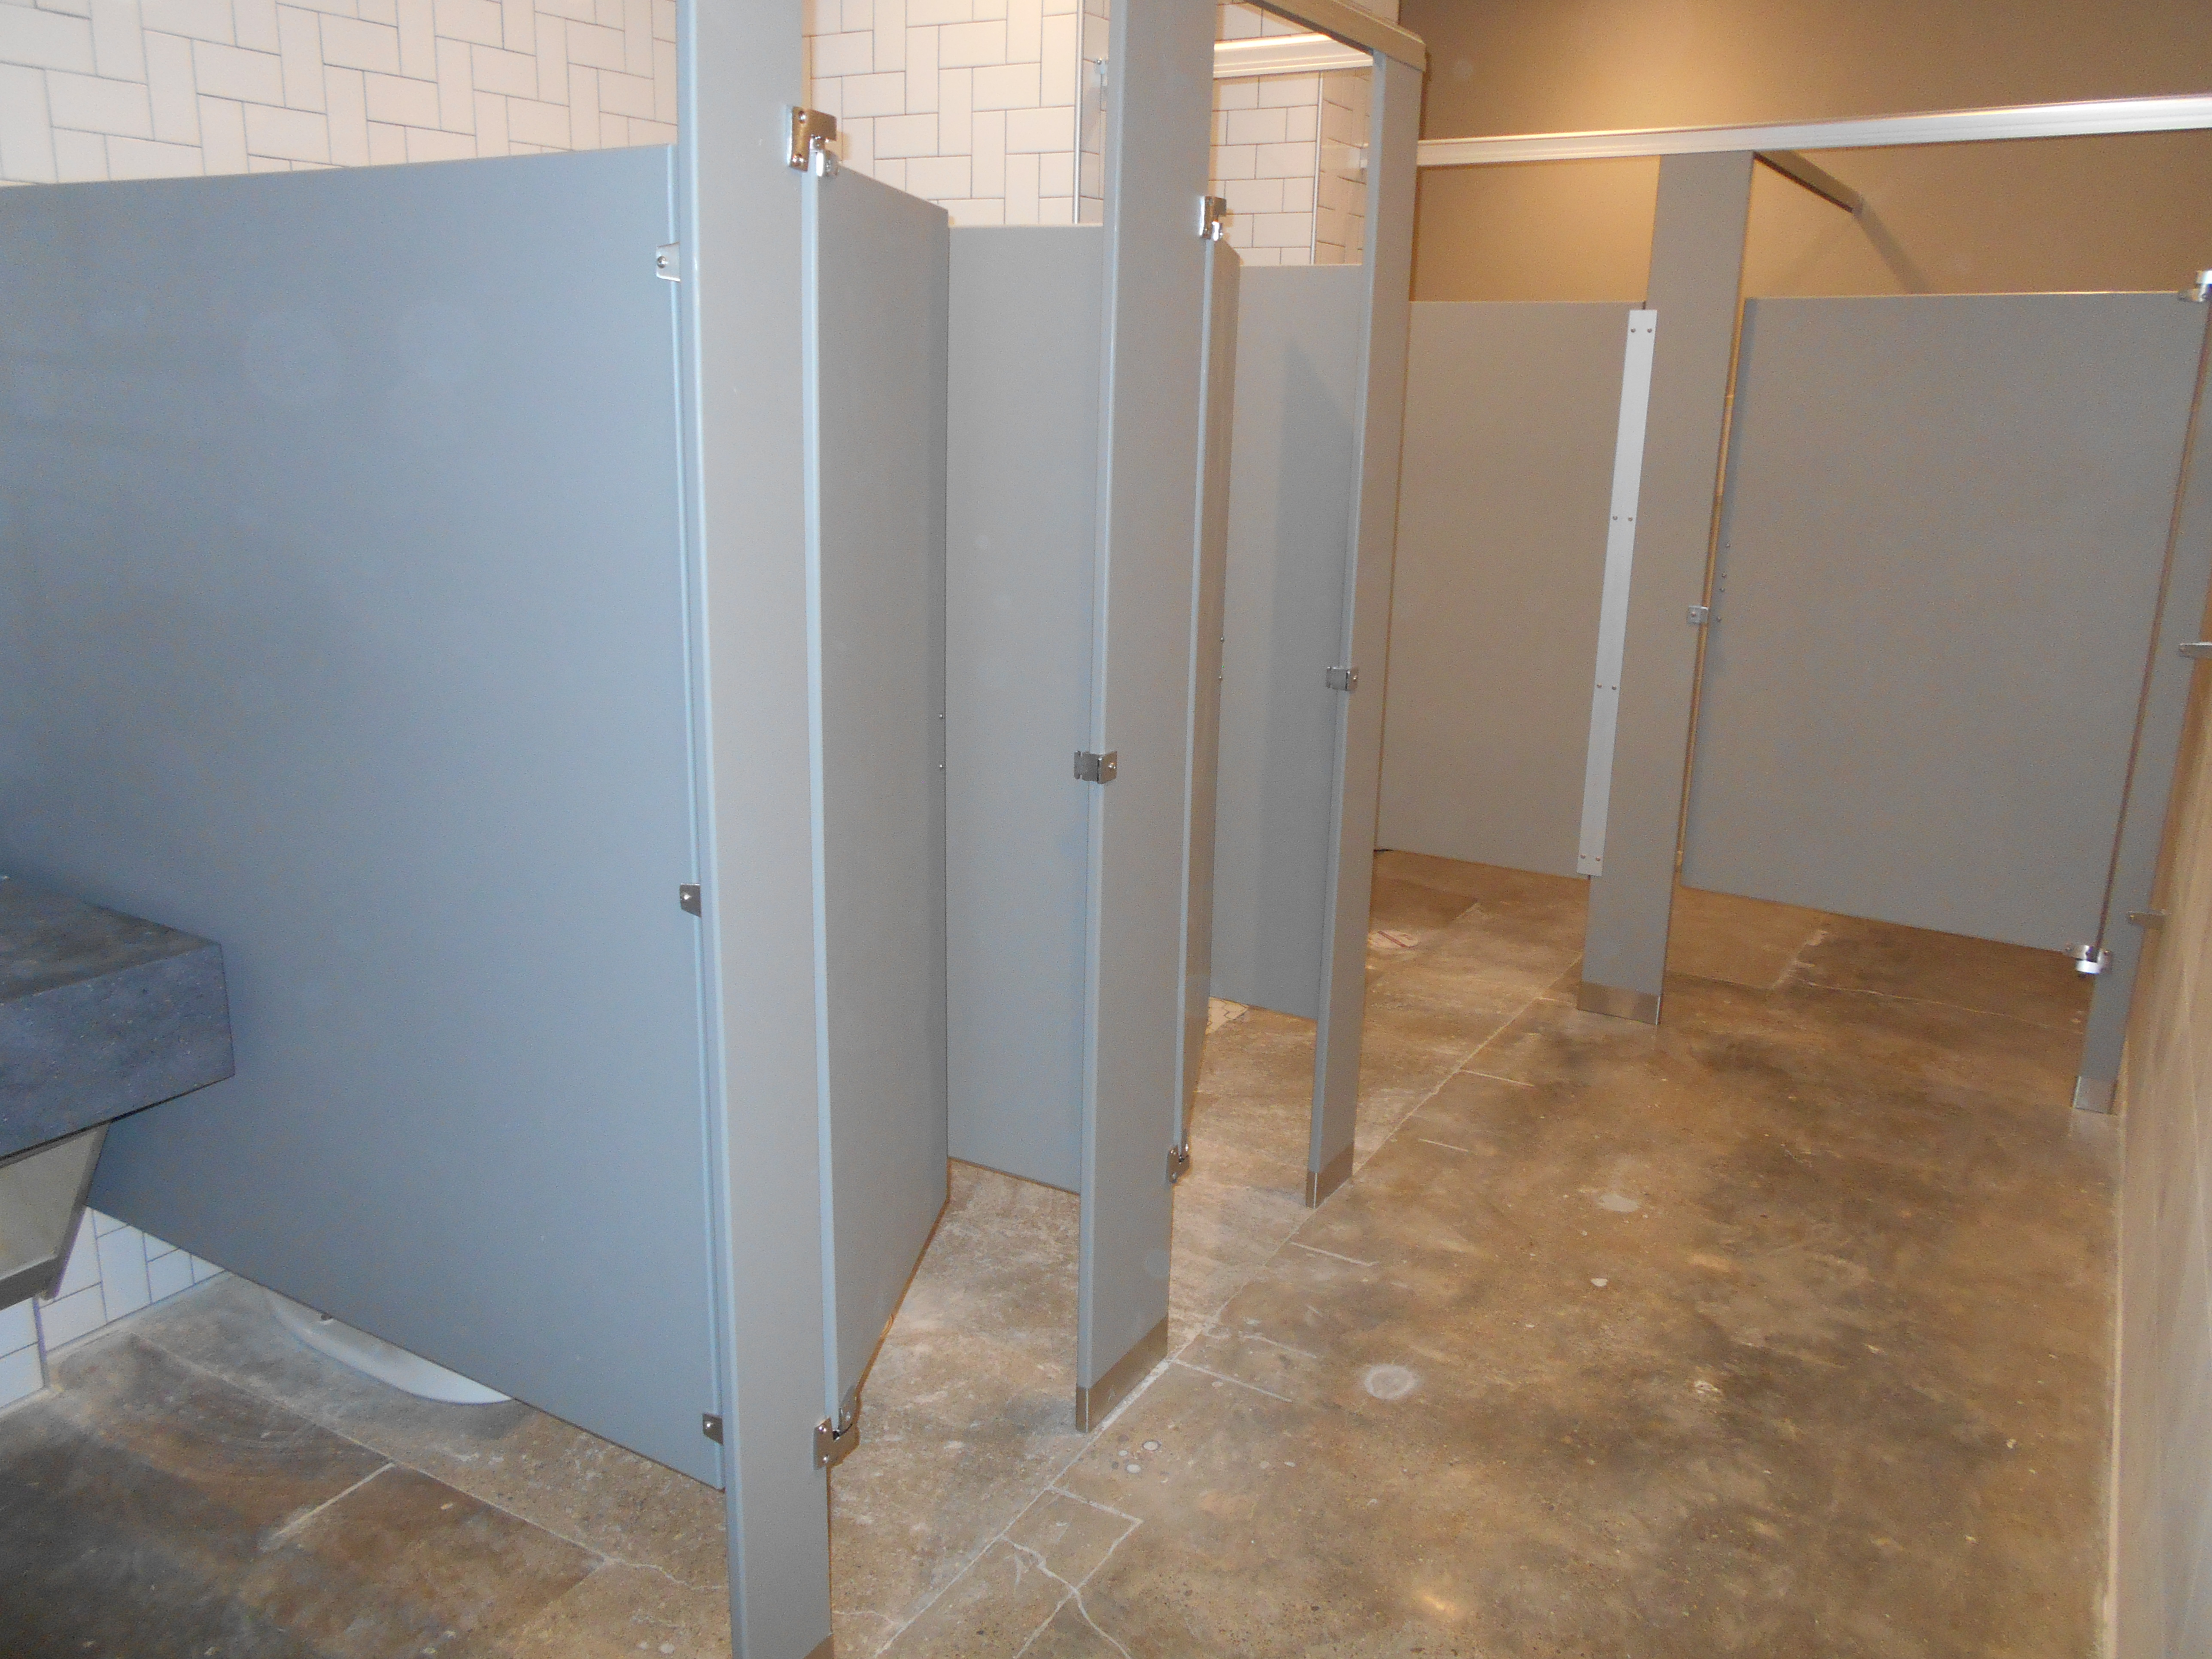 6-29-16 001 Bathroom Stalls